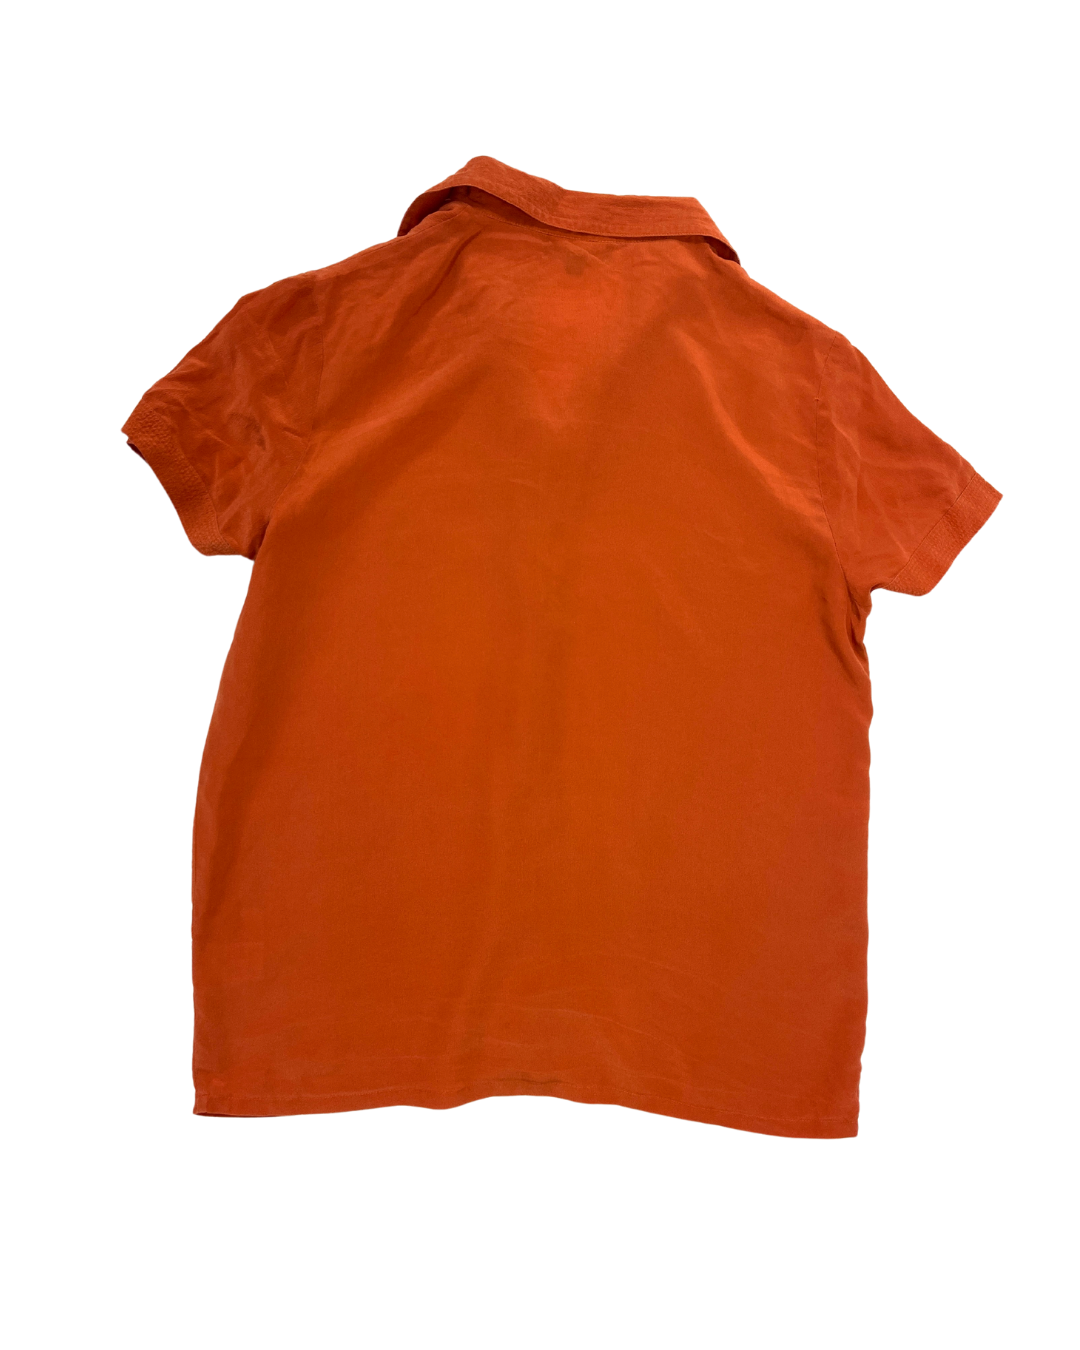 Monsoon Orange Shirt